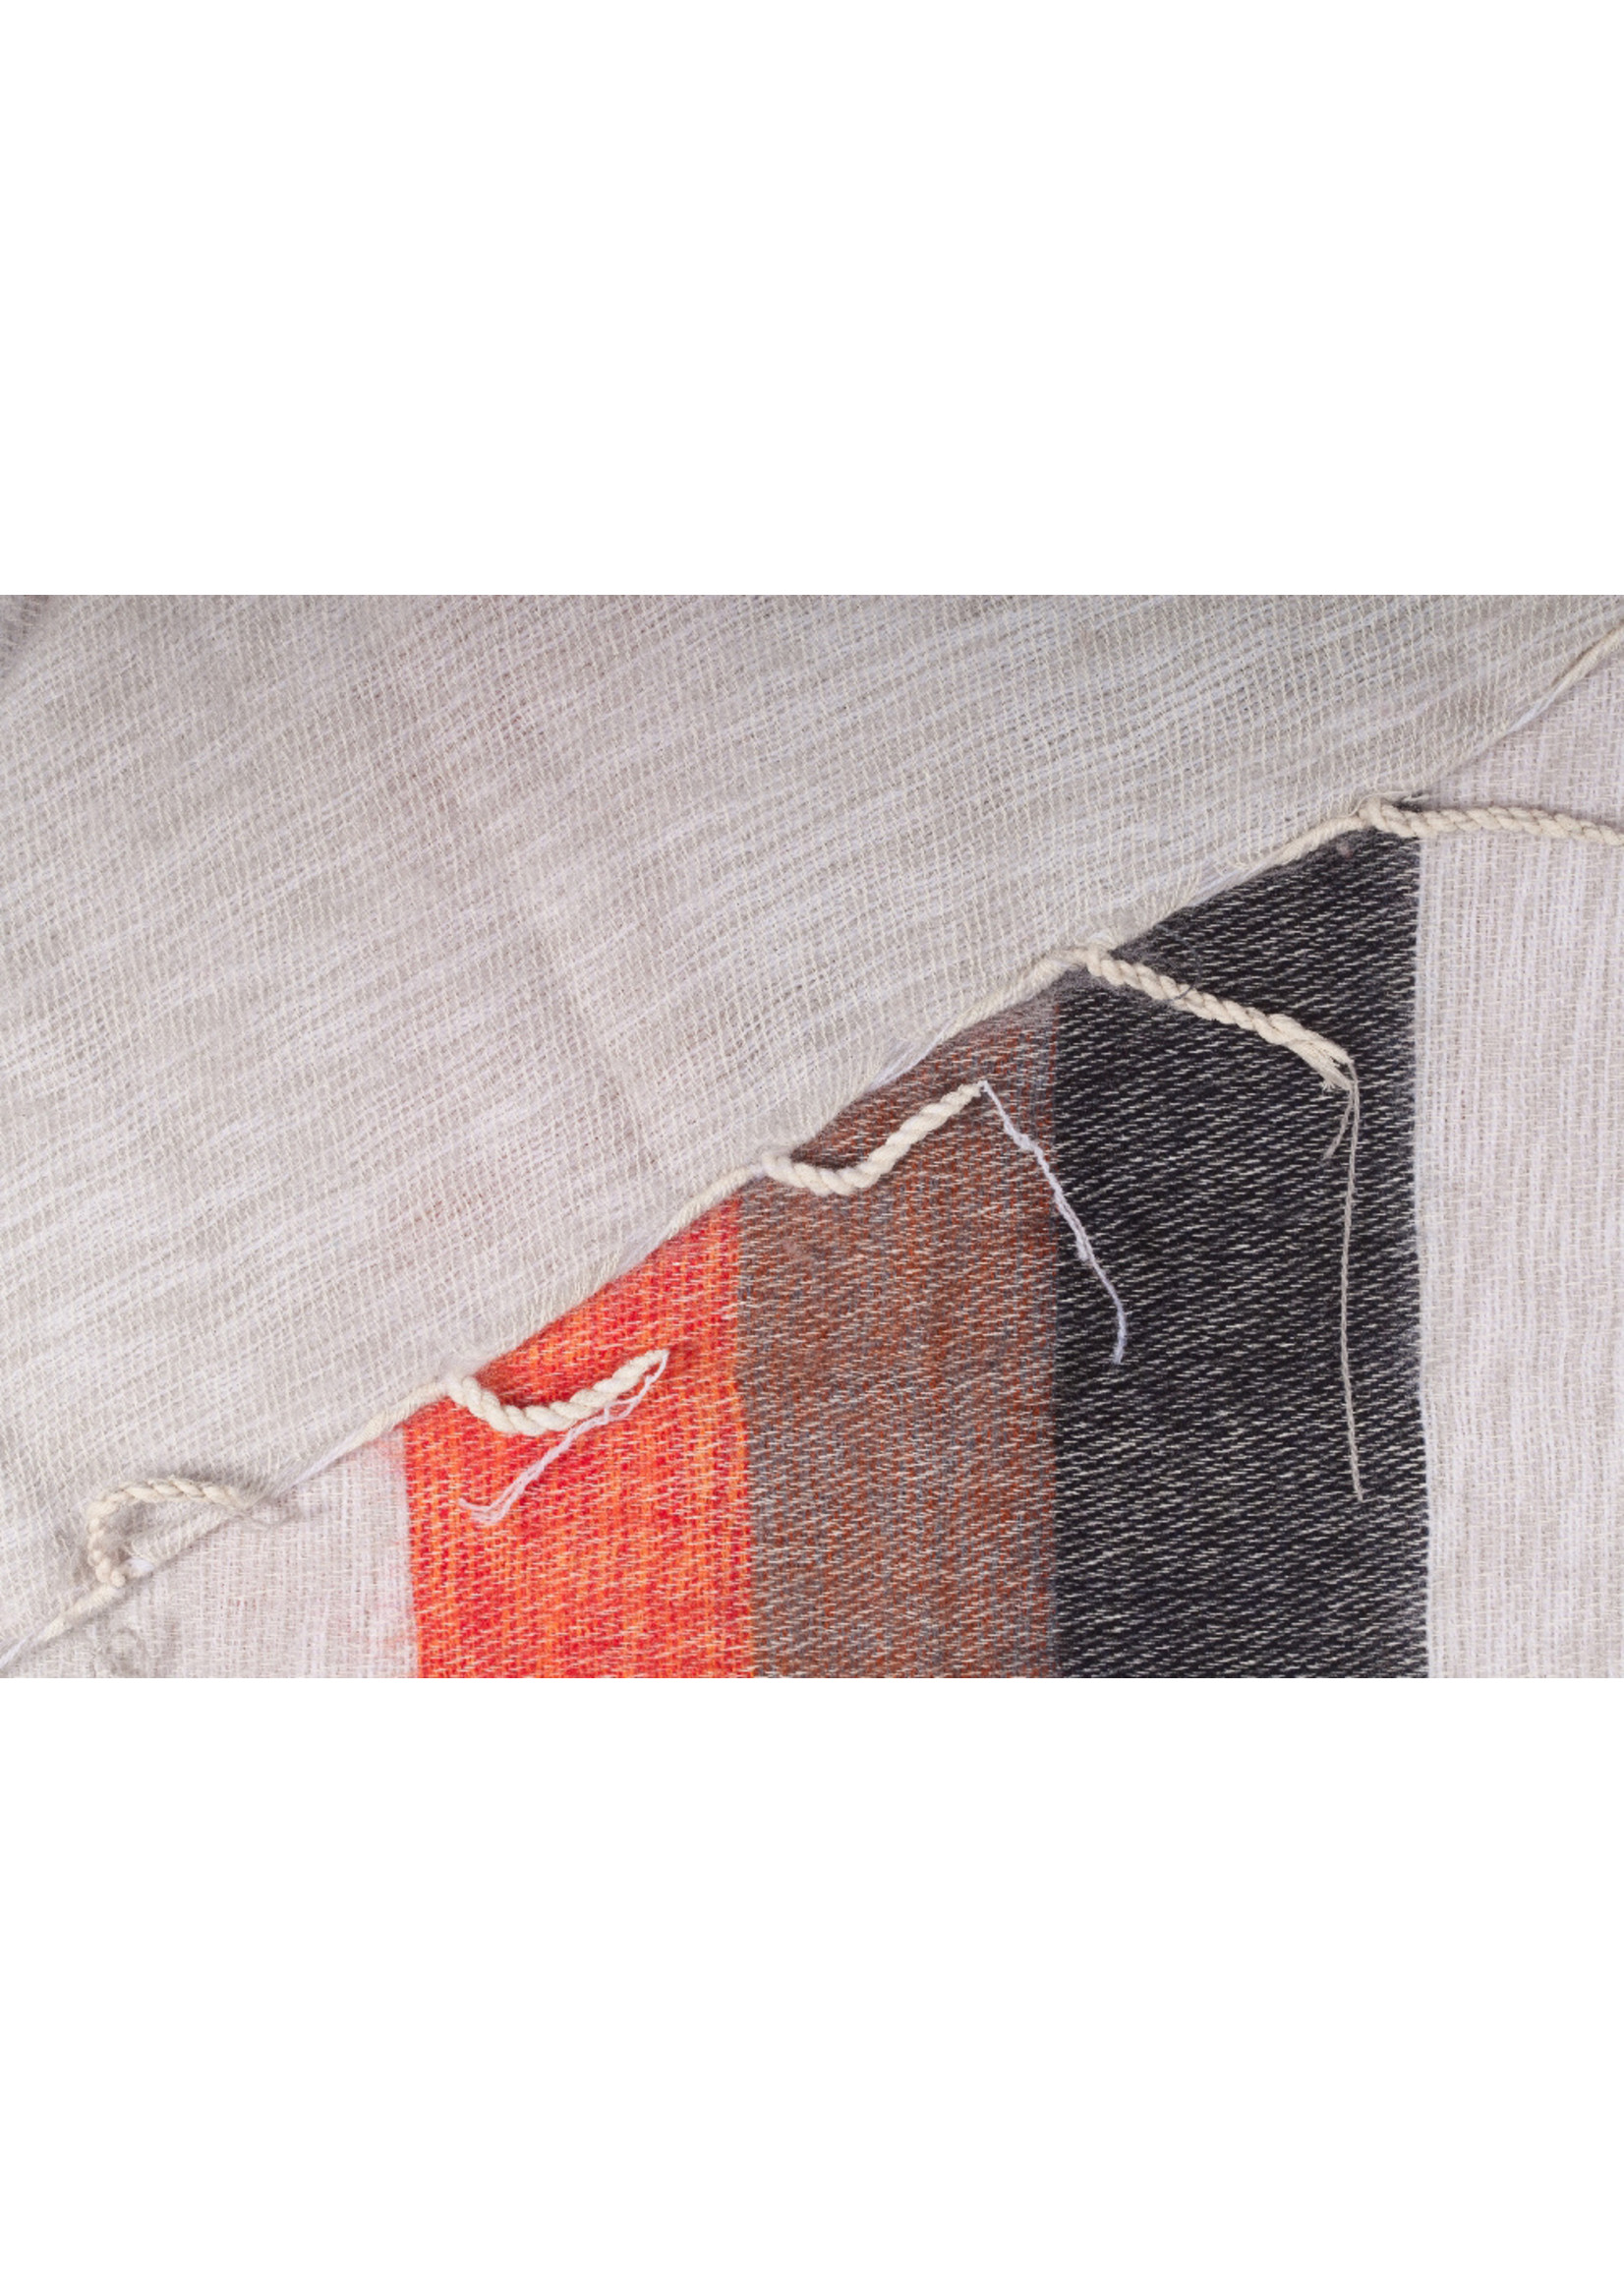 Sjaal met Verhaal Shawl 180x80 cm (wool-look) cream-taupe-orange